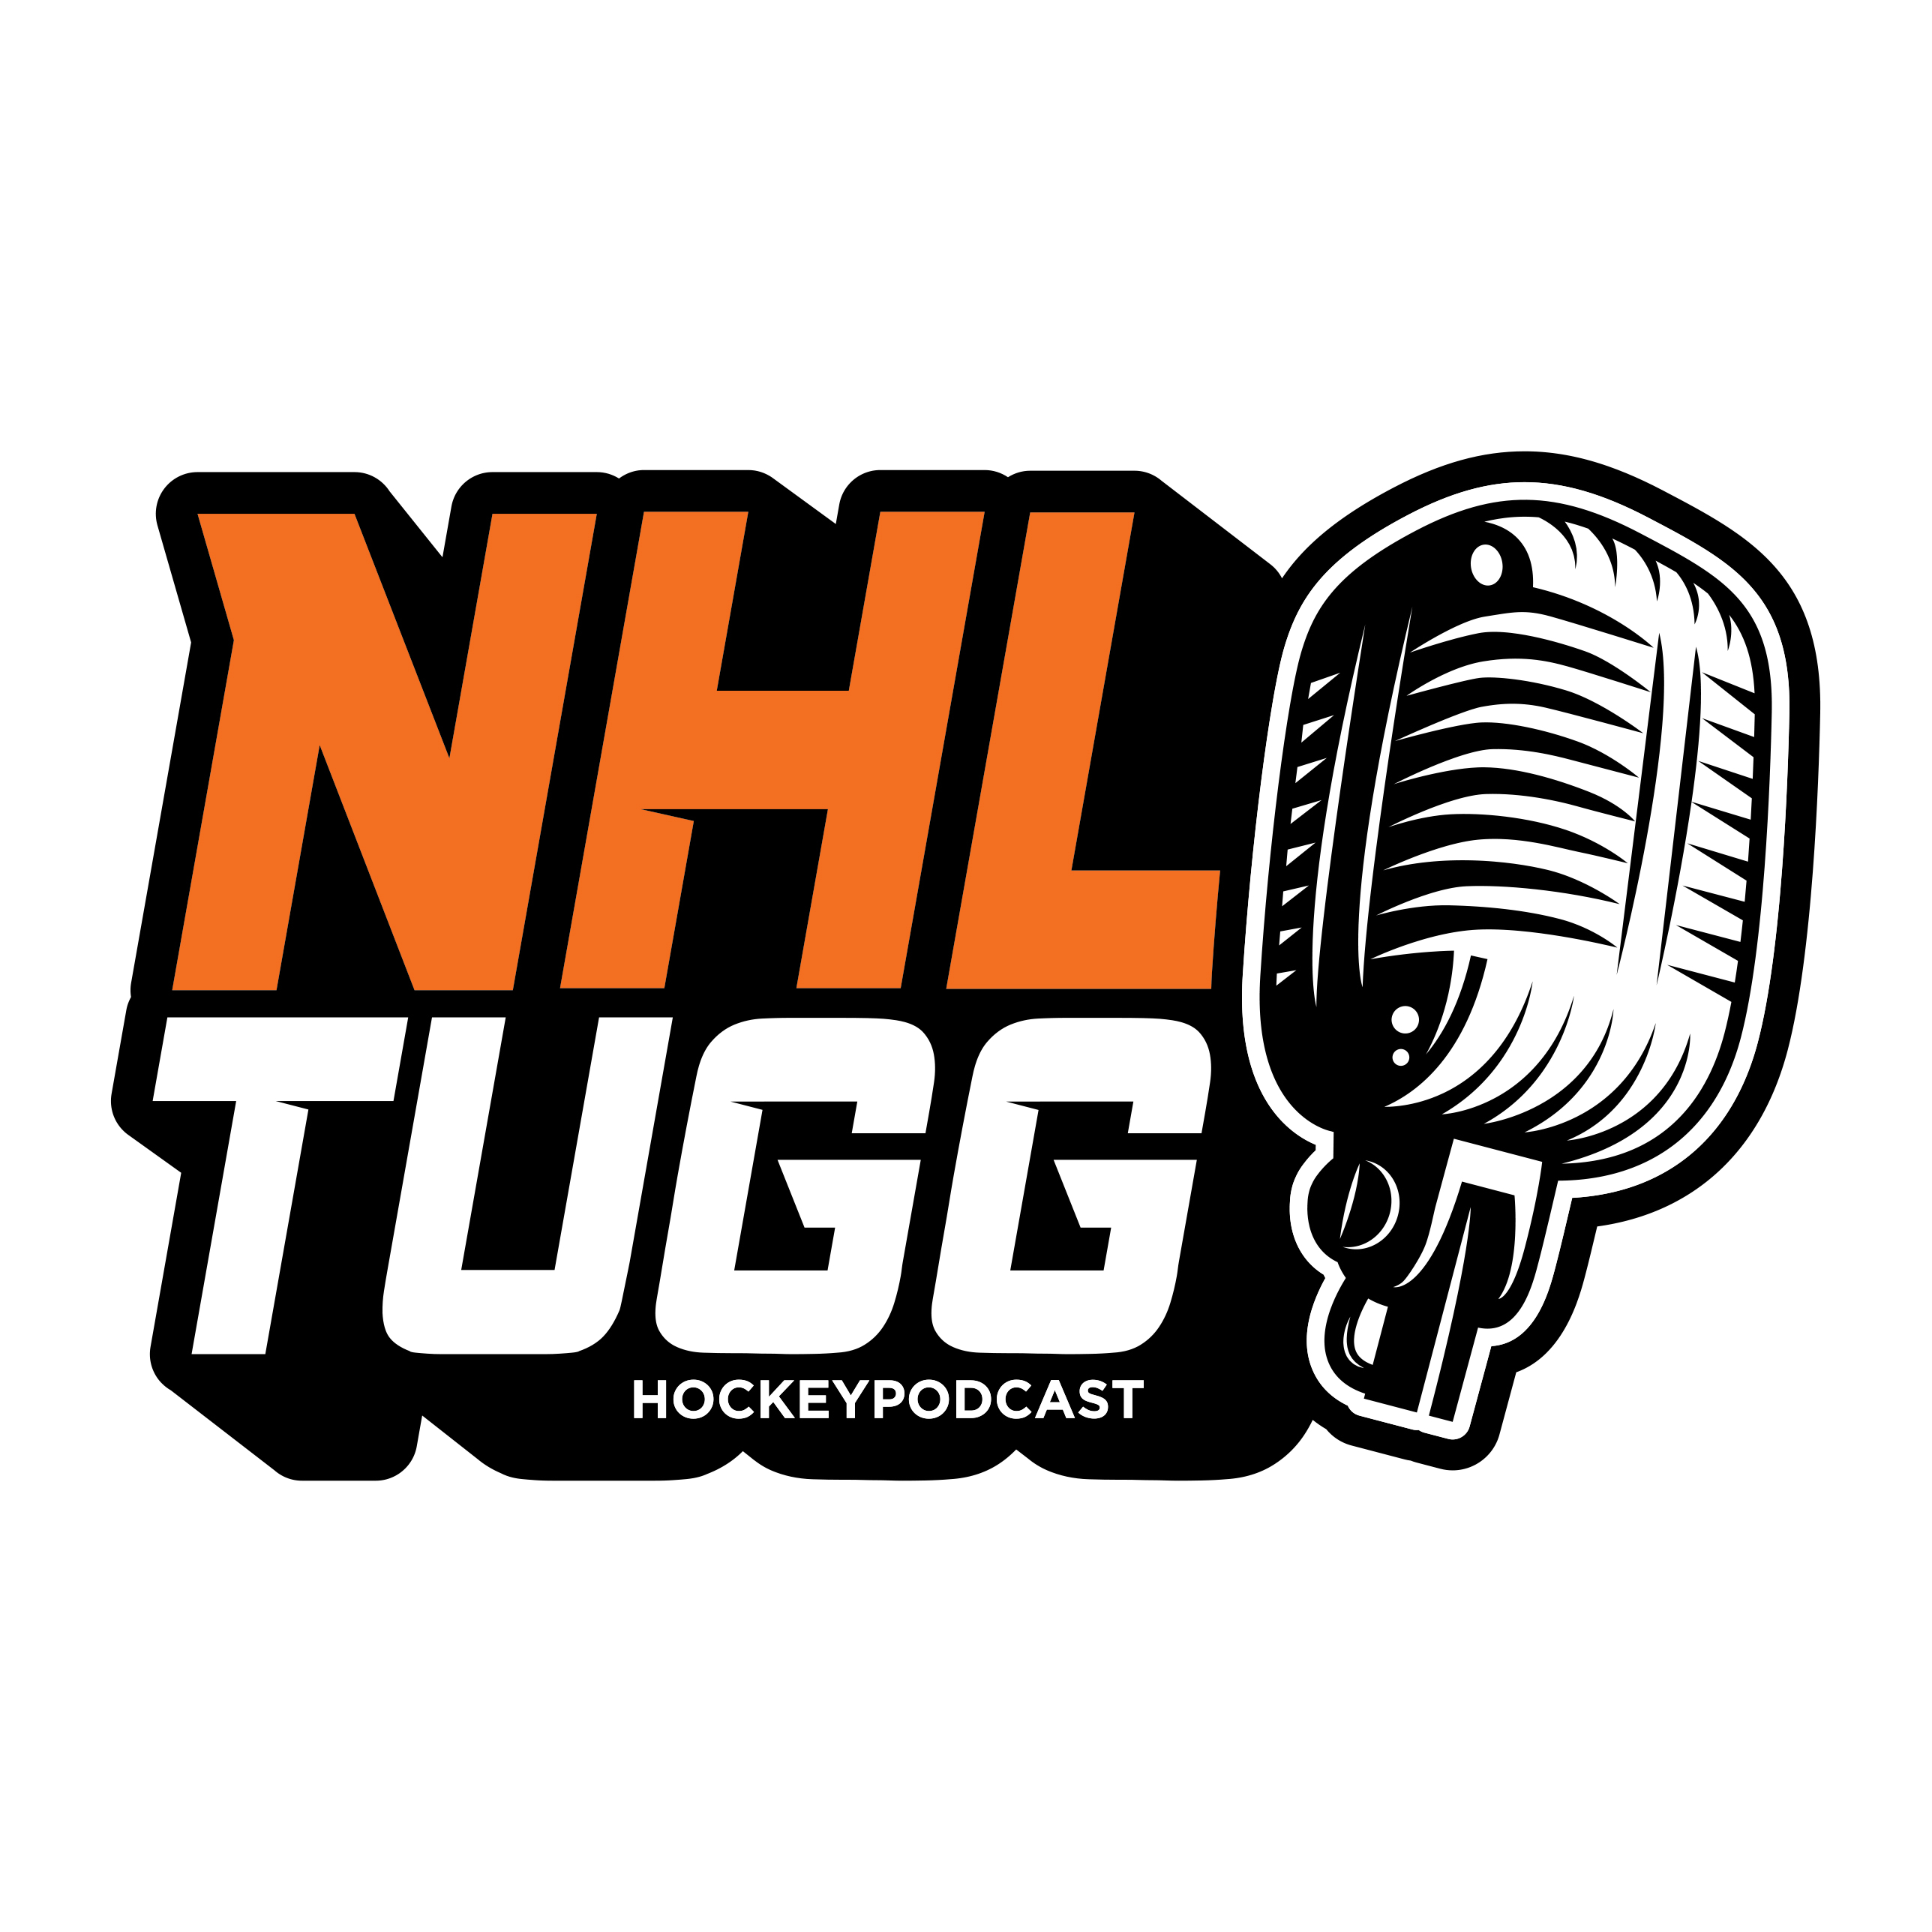 NHL-Tugg avsnitt 87 ”En tidig expansionsdraft av Seattle”